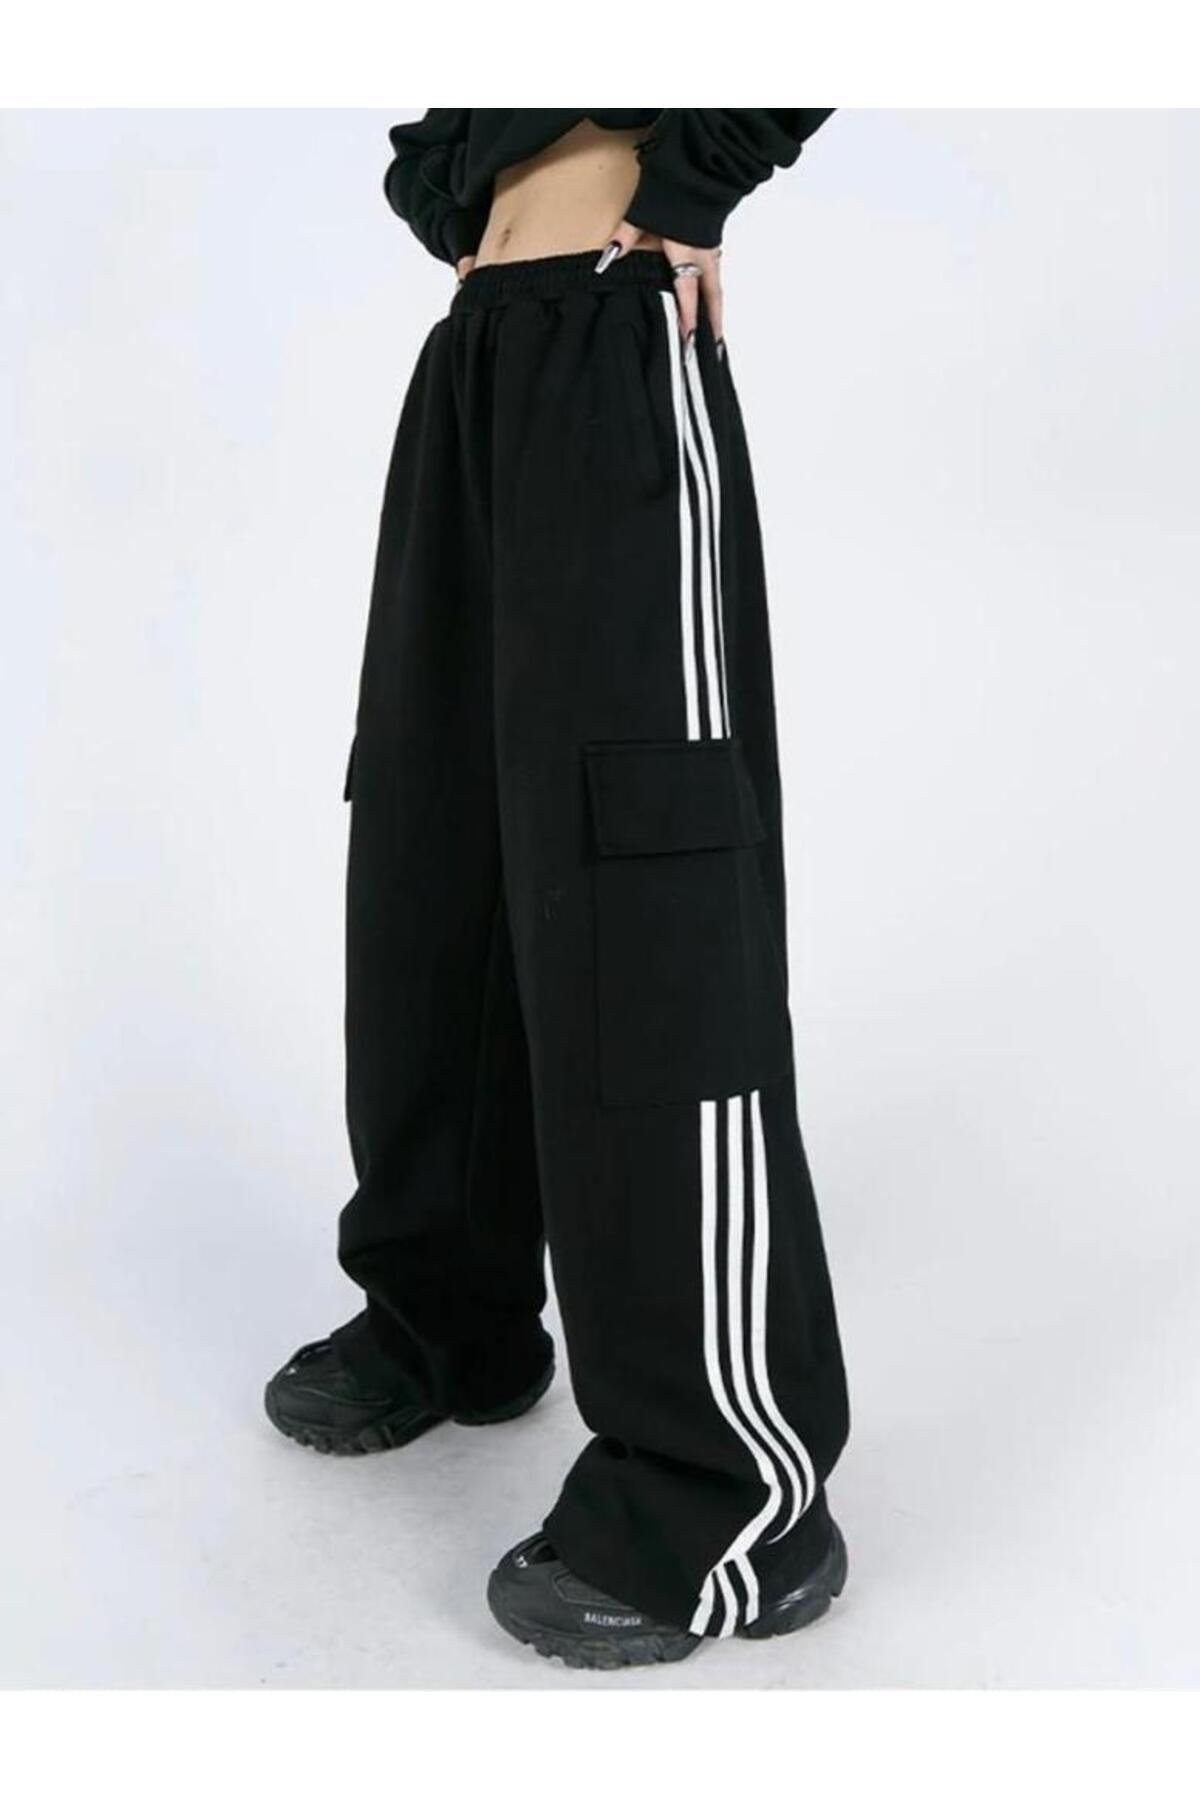 Three Striped Pocket Unisex Black Sweatpants - Swordslife